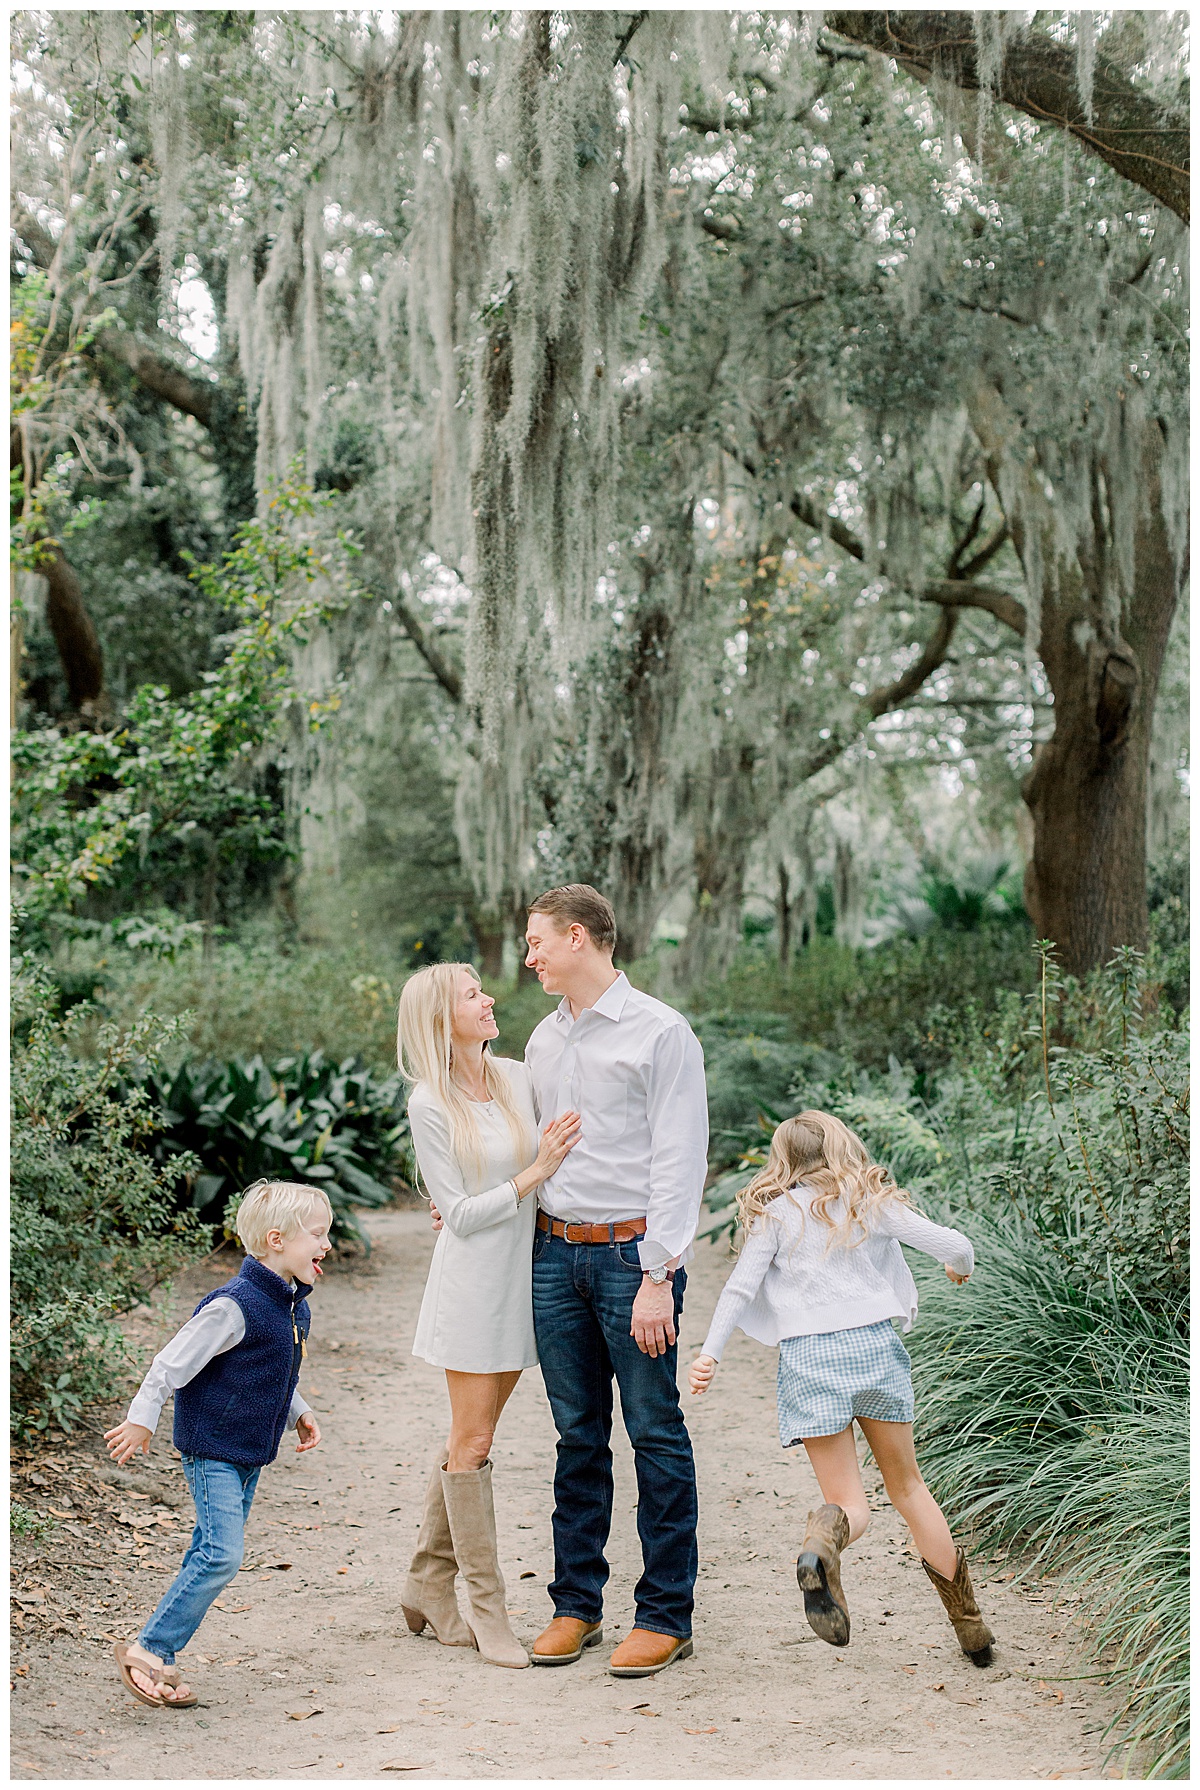 The Speir Family - Family Portraits in Charleston Gardens | Charleston Family Photographer | Candice Adelle Photography_0154.jpg